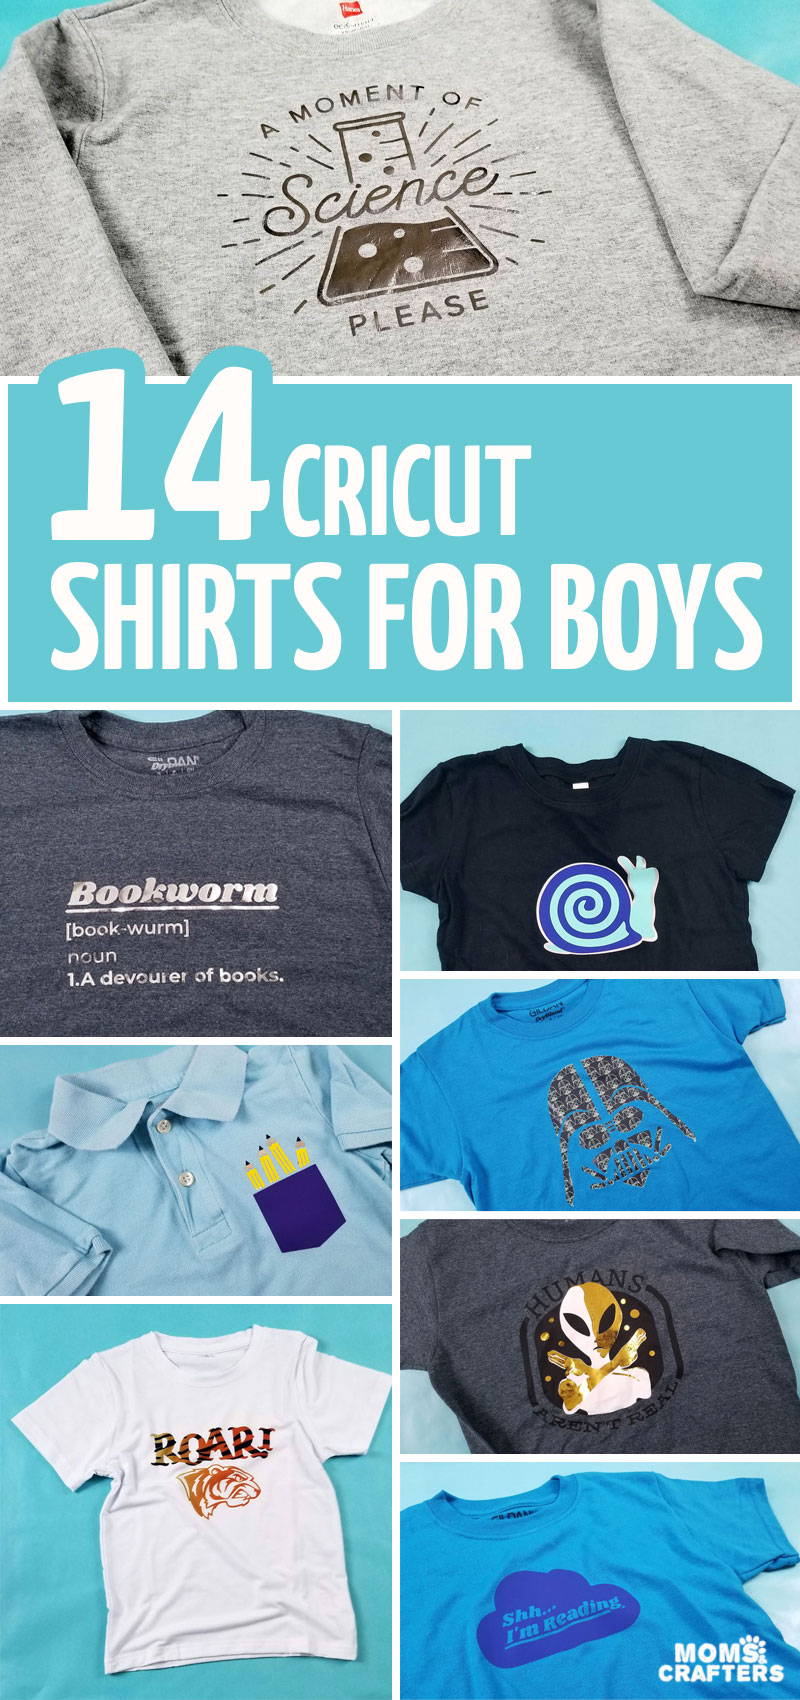 Cricut Shirt Ideas for boys collage